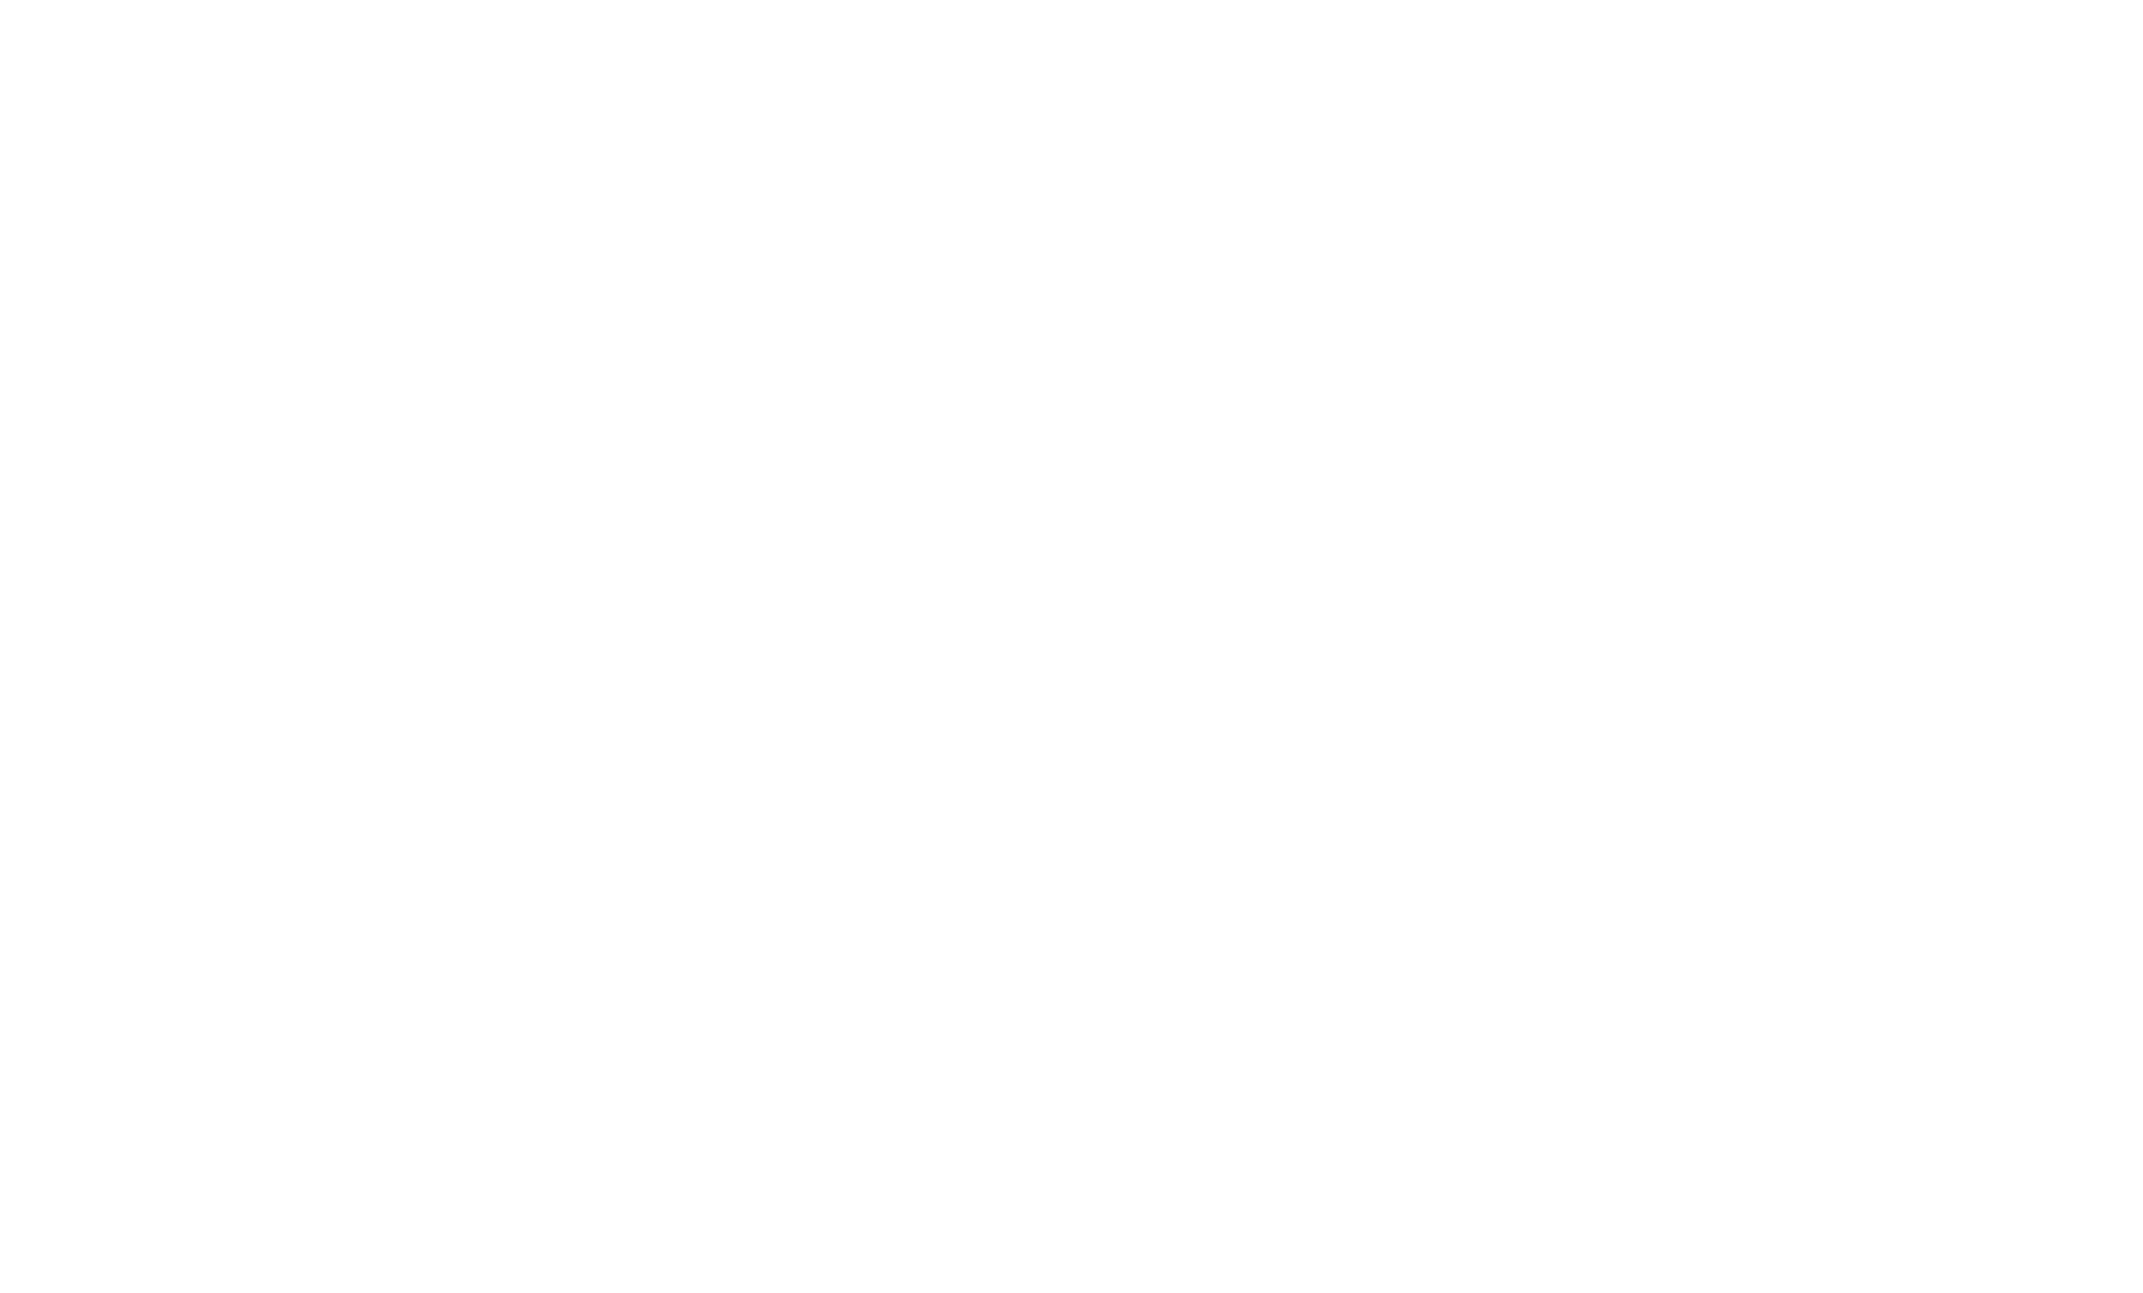 DoorStain New logo